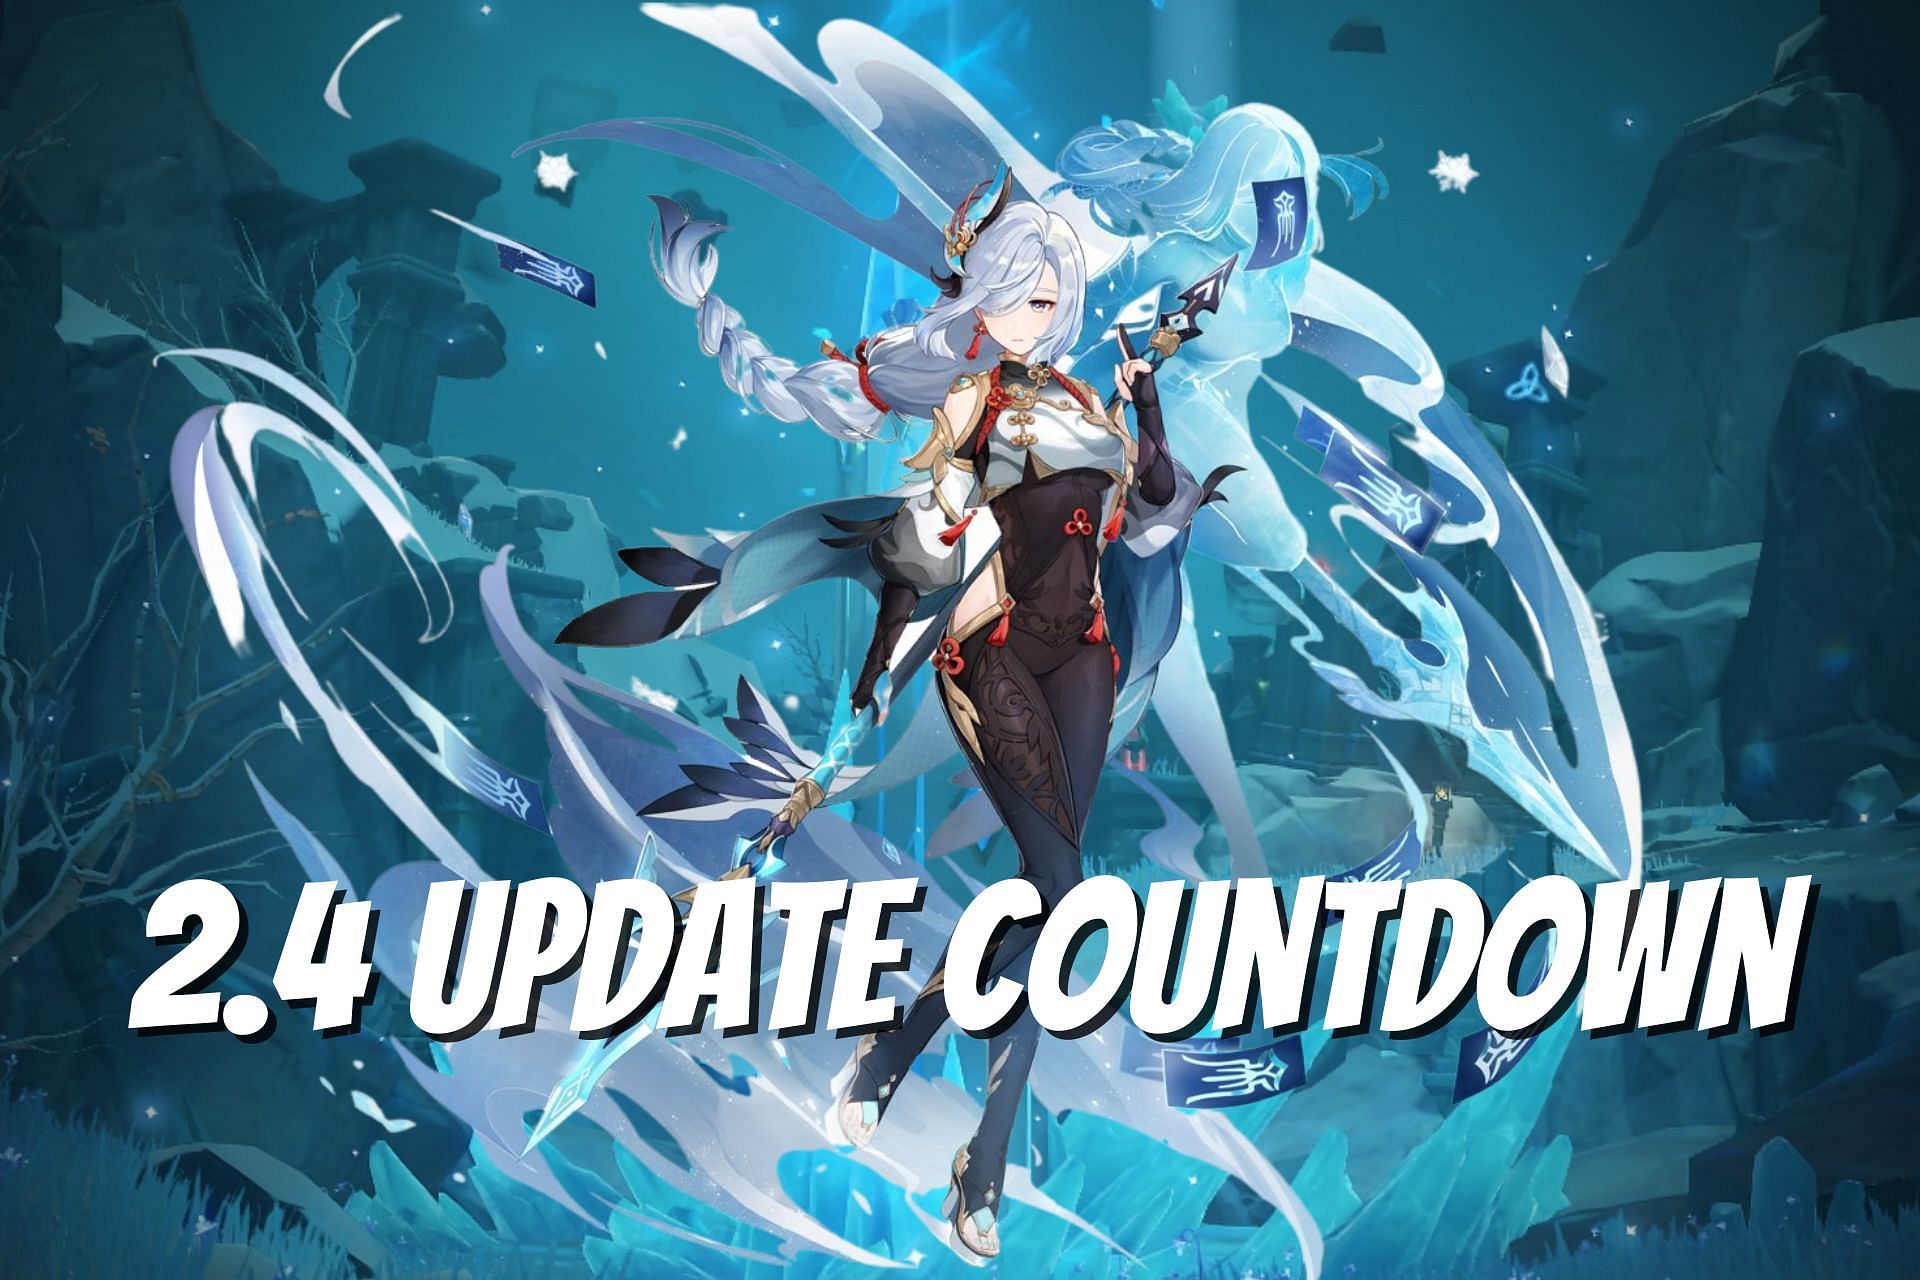 Genshin Impact 2.4 Update countdown, release date and maintenance schedule